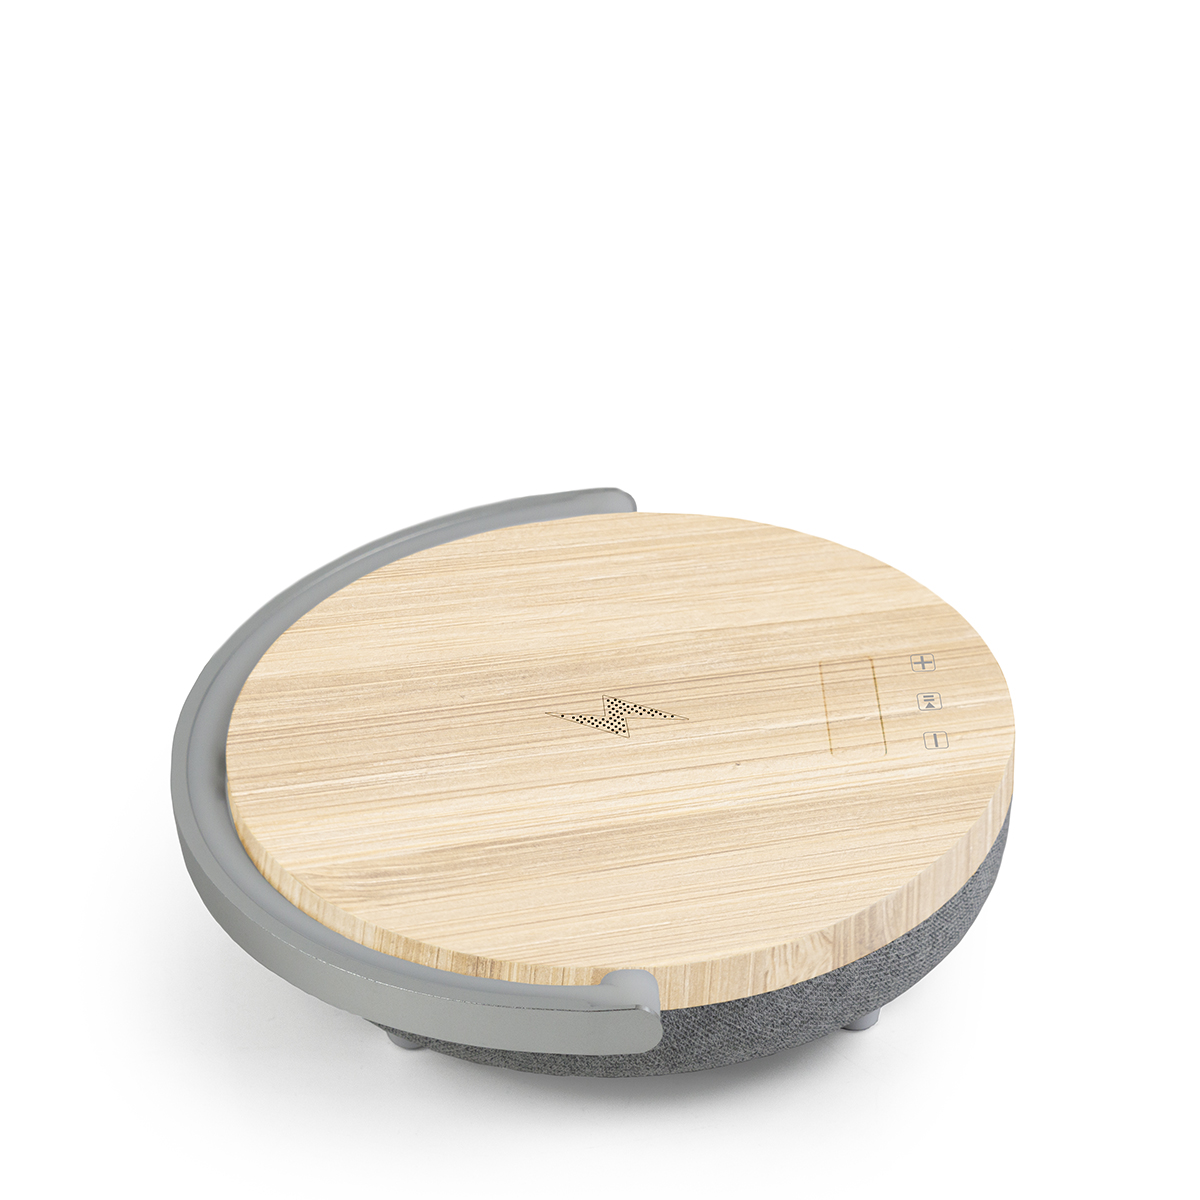 PRIXTON Speaker Light Holz Bluetooth-Lautsprecher, Wood